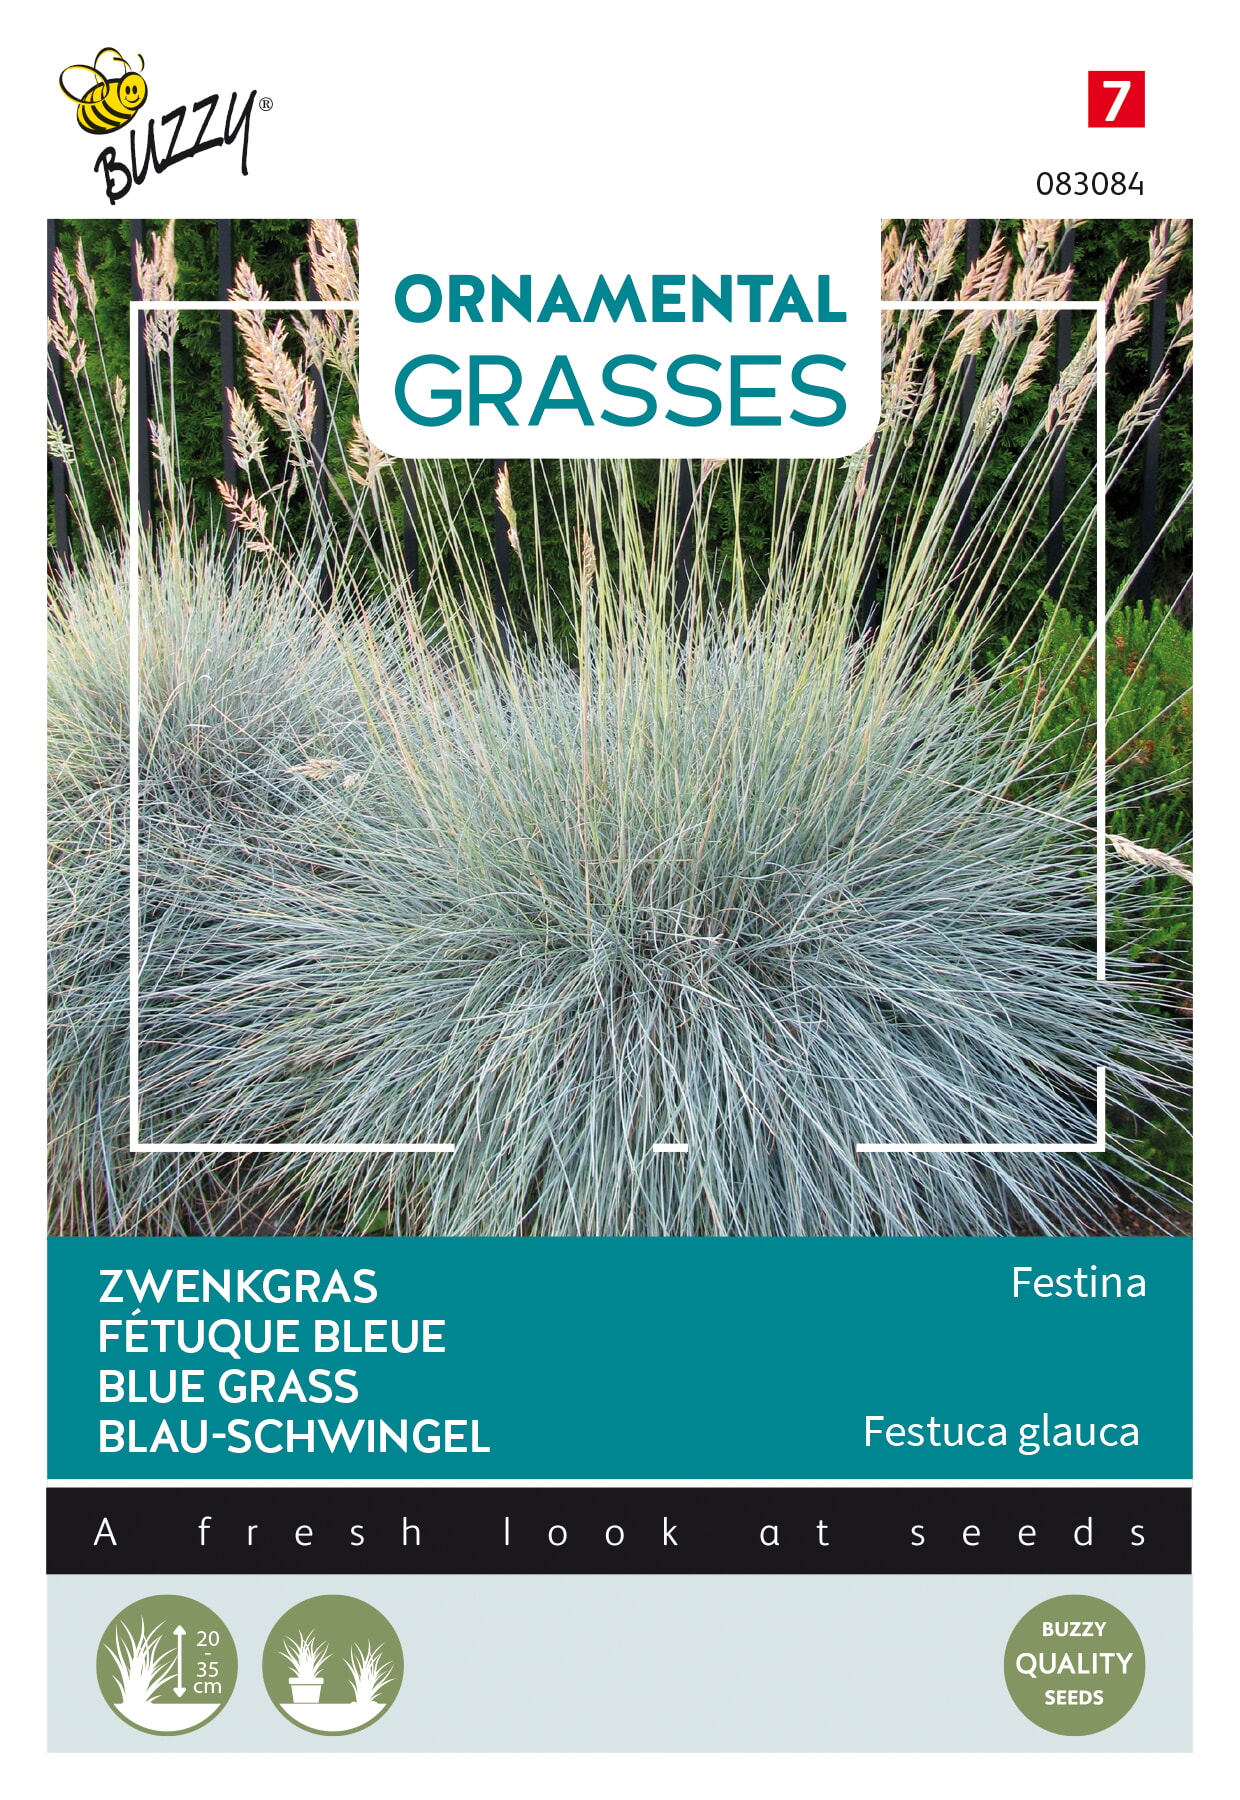 https://www.warentuin.nl/media/catalog/product/S/C/SCAN8711117830849_buzzy_tuinzaden_zaden_ornamental_grasses_festuca_glauca_blaue_86a2.jpeg